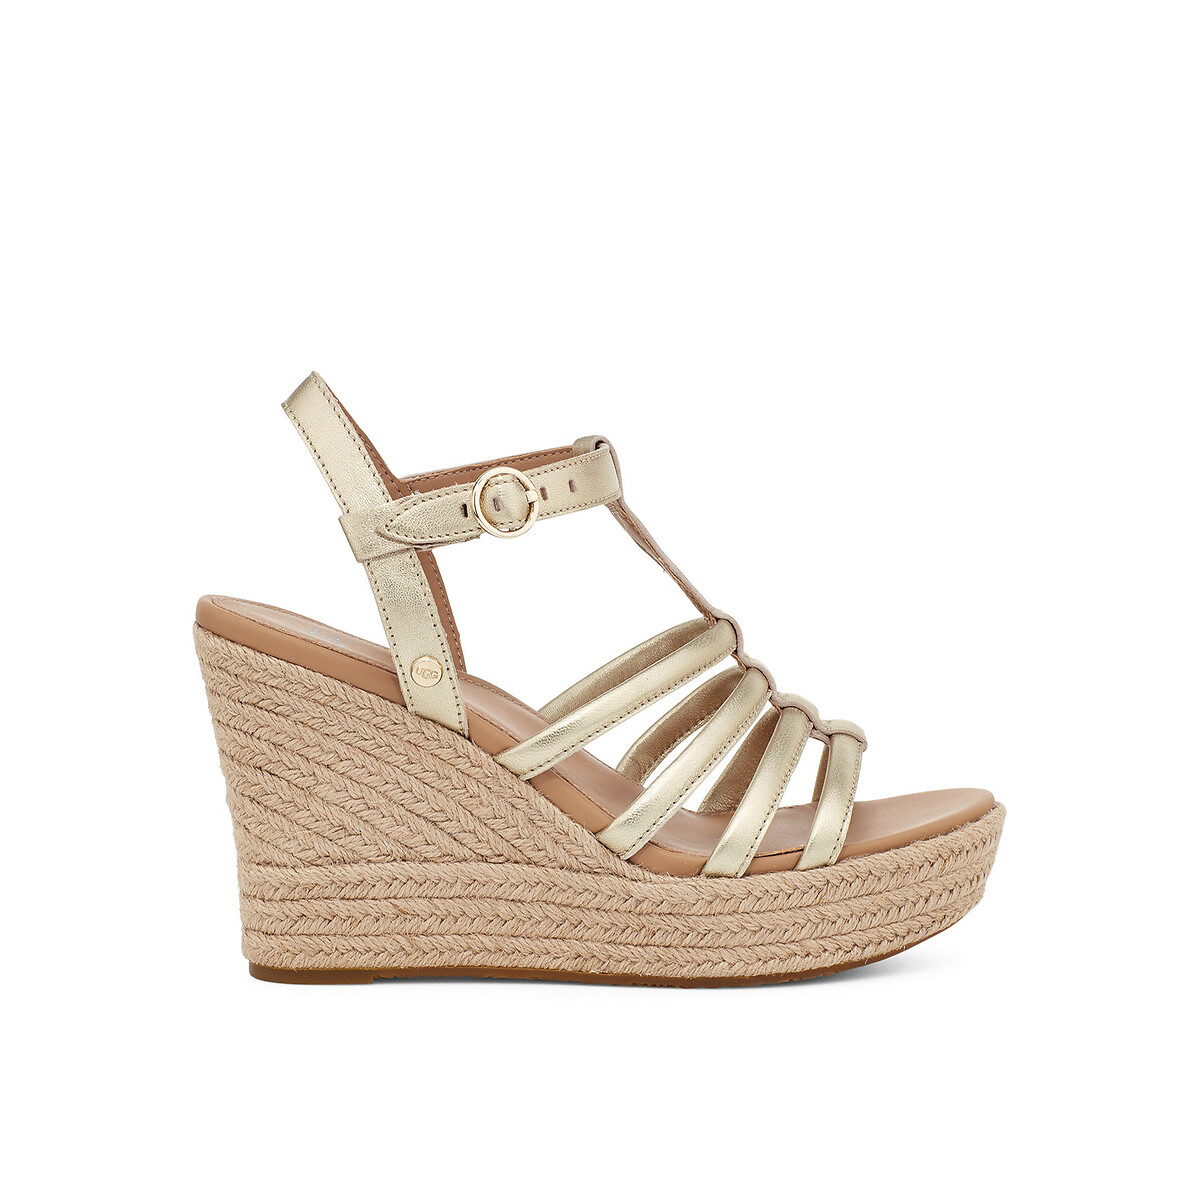 Cressida wedge sandals , gold-coloured, Ugg | La Redoute